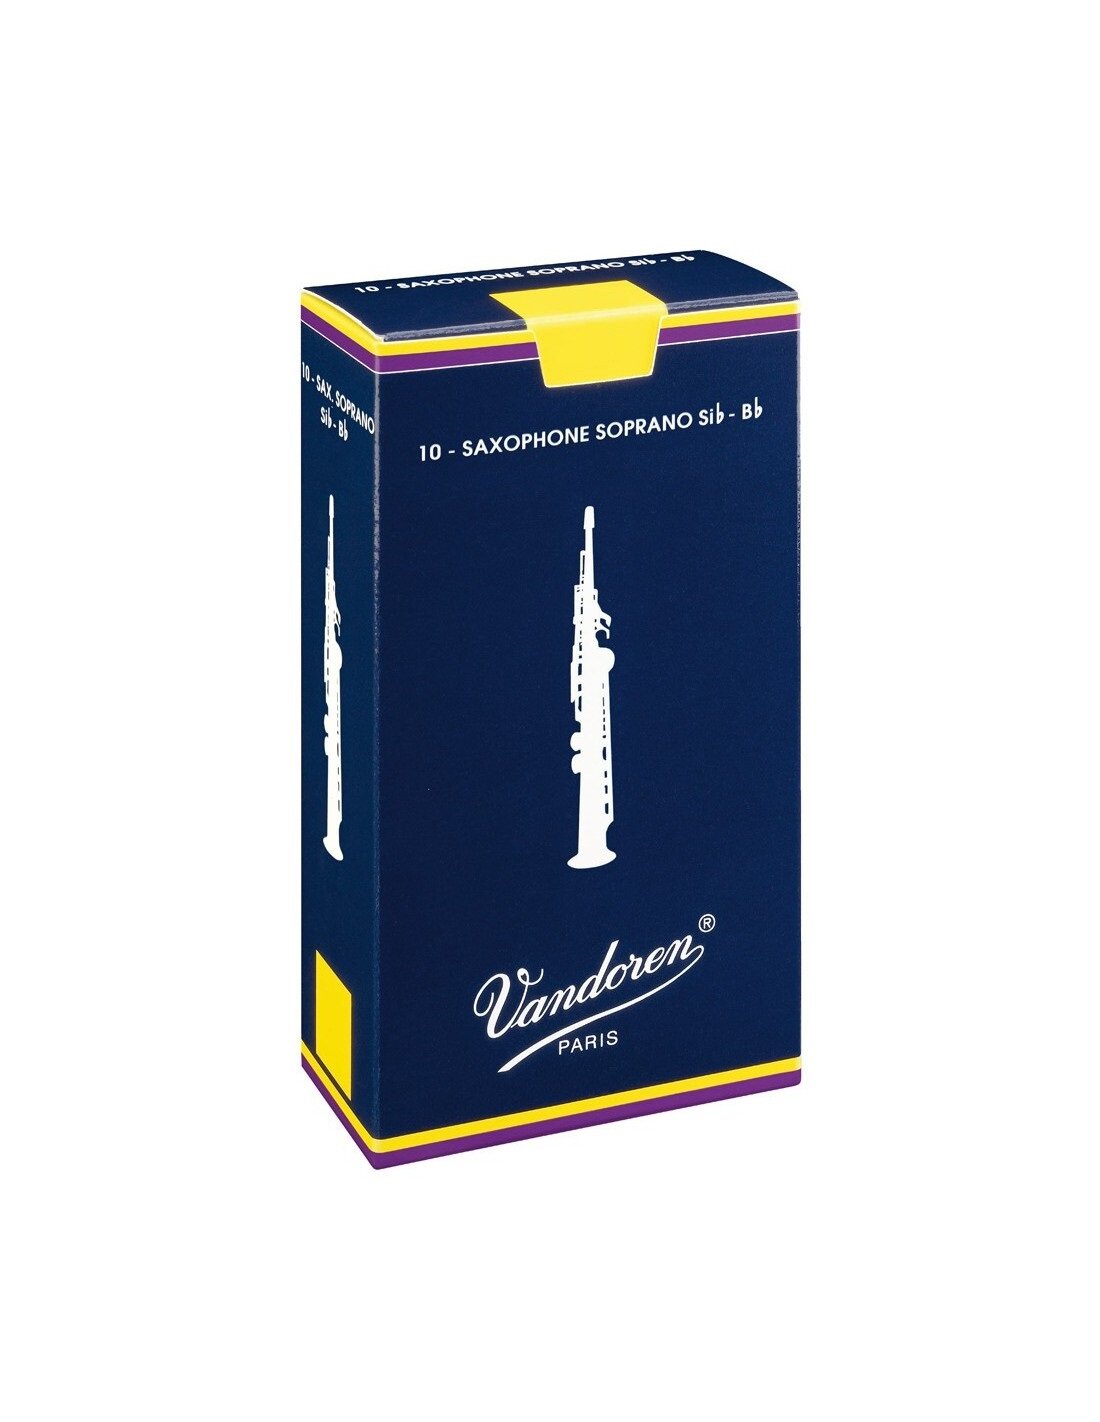 Vandoren Classic Saxophone Soprano Sib Force 3.5 x10 : photo 1